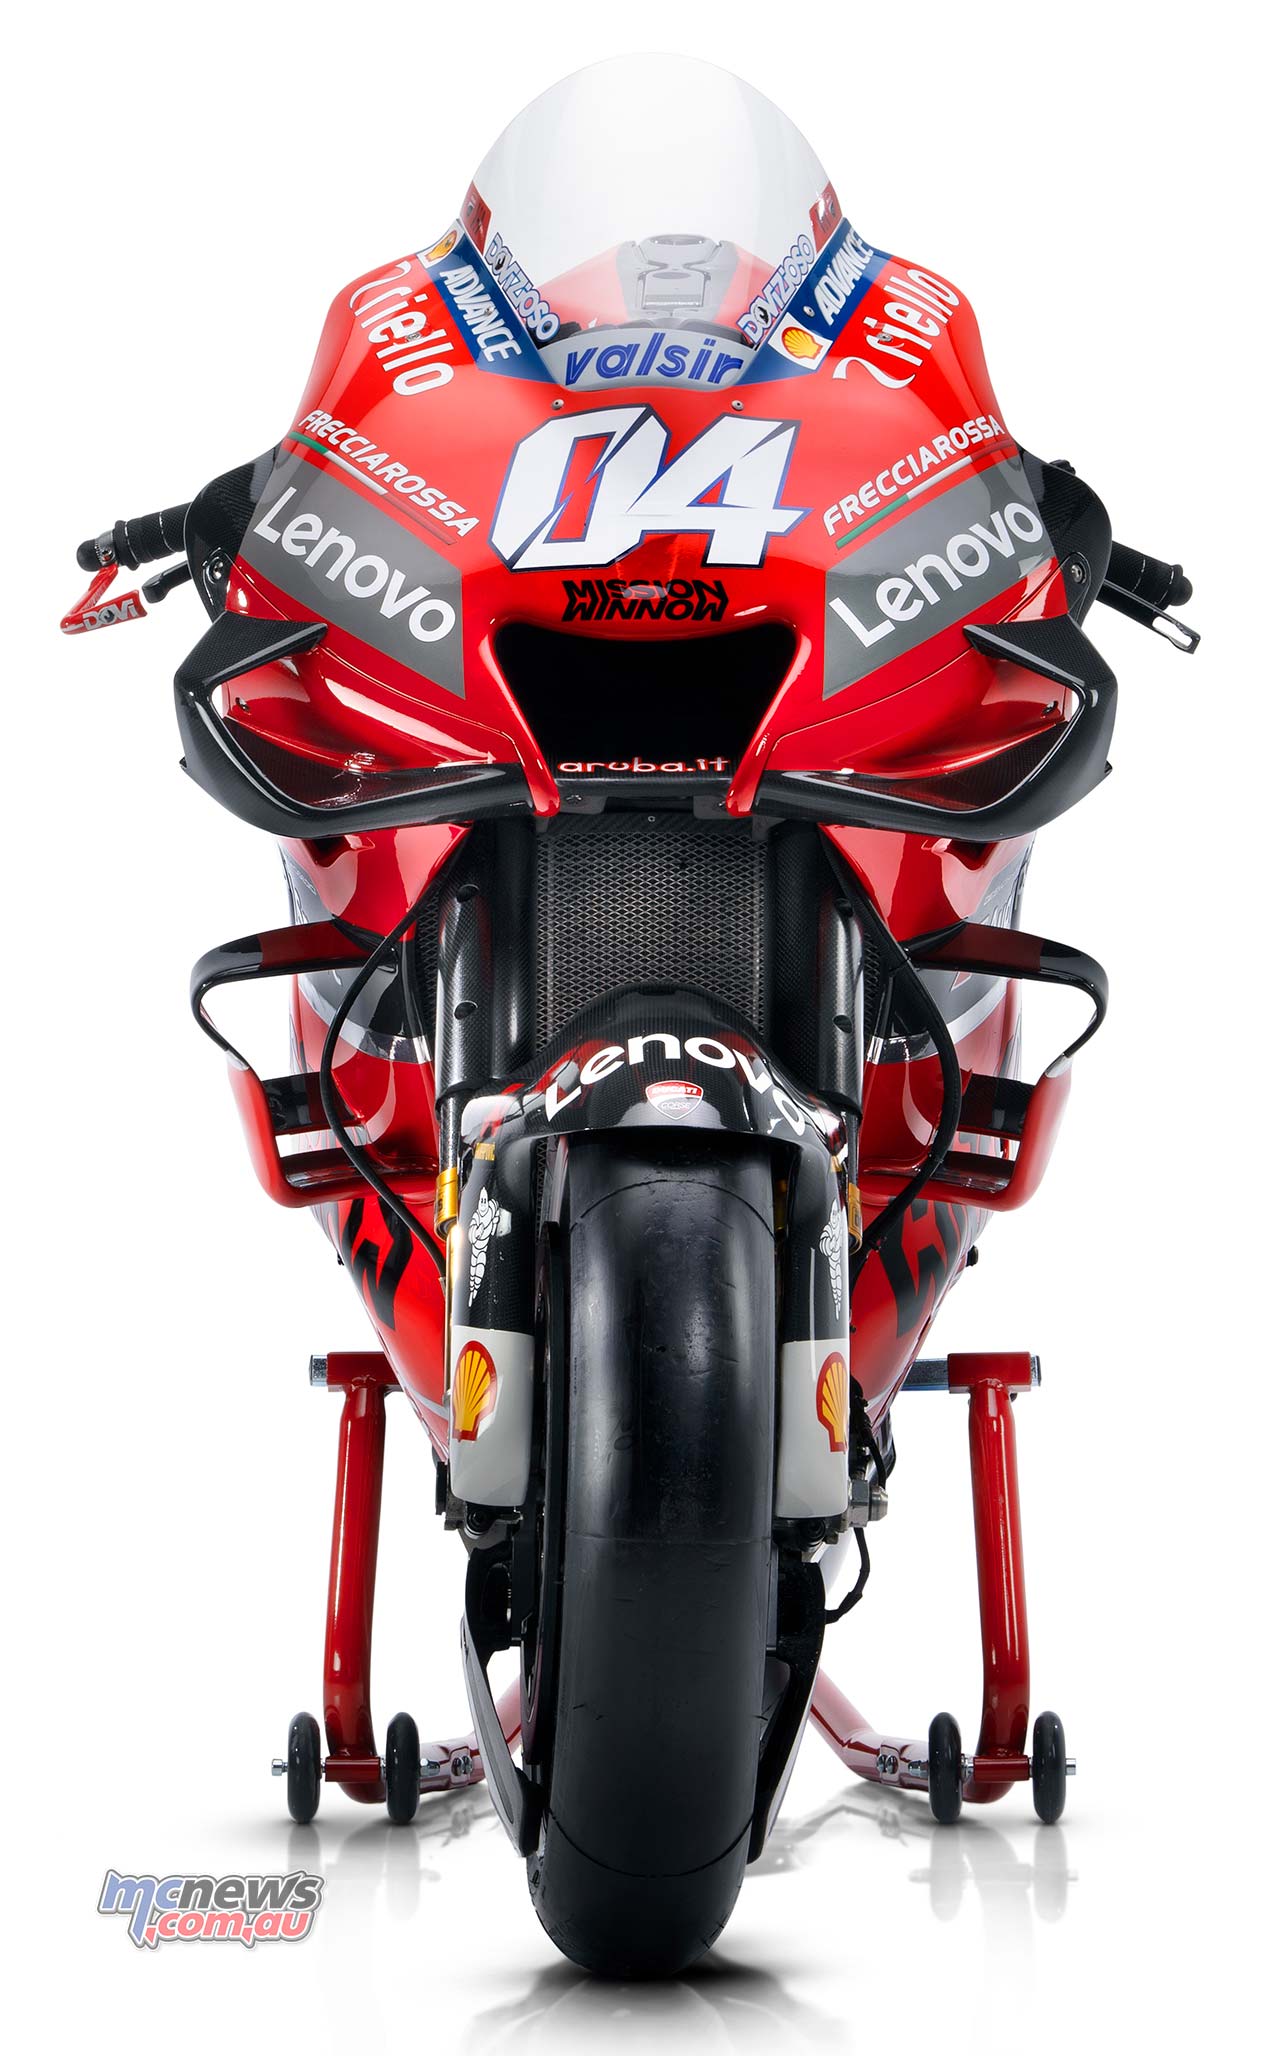 MotoGP Ducati Desmosedici Specifications